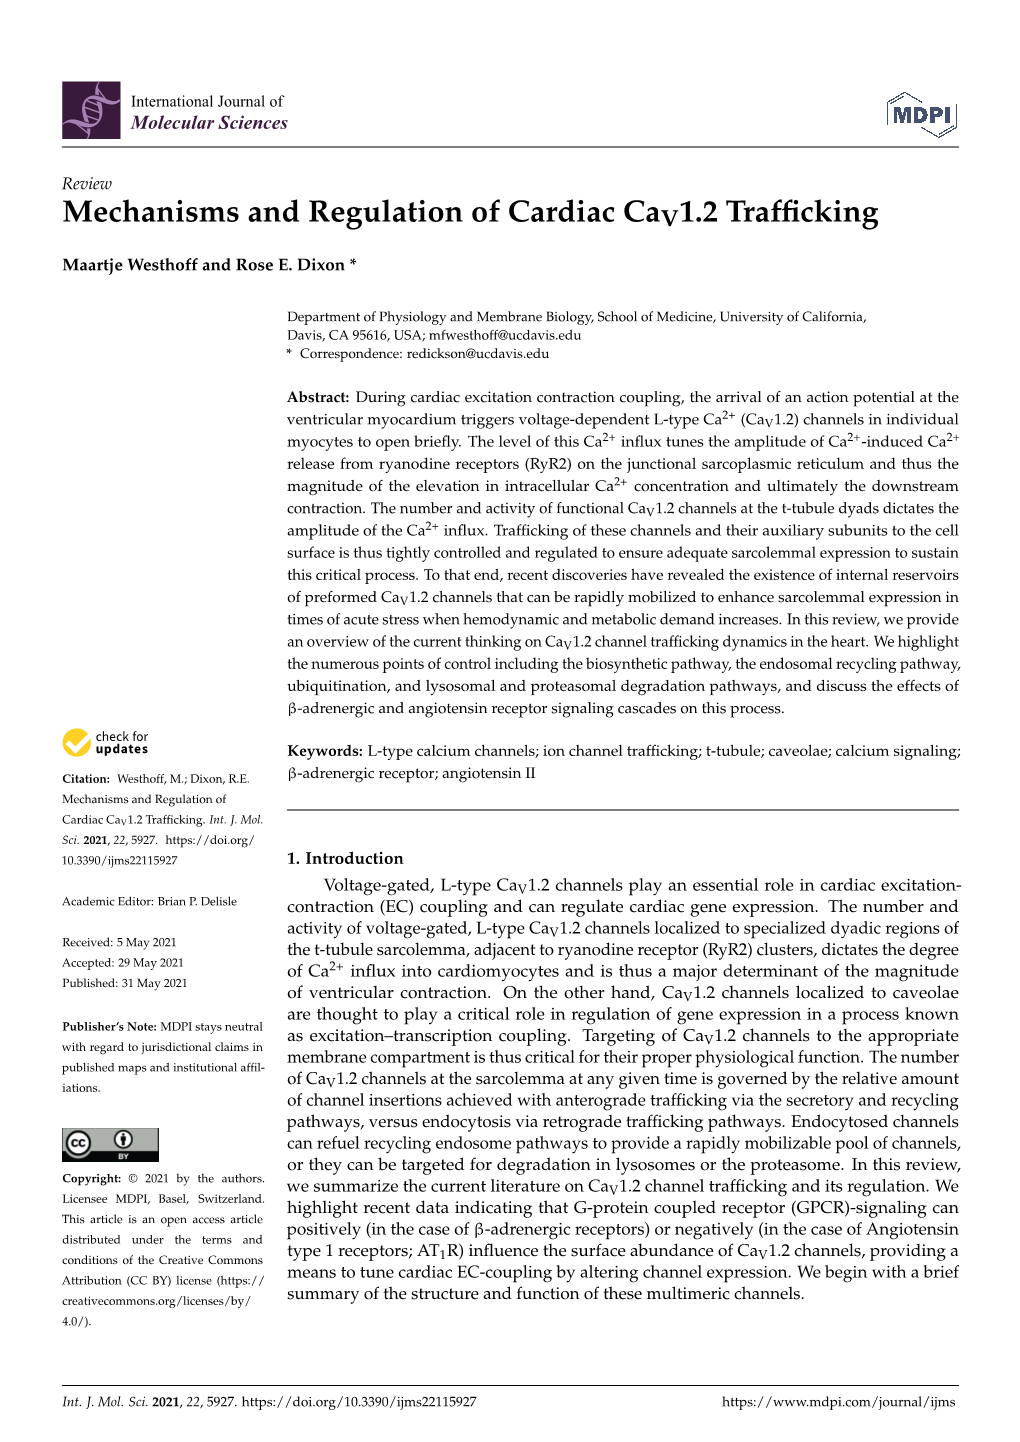 Mechanisms and Regulation of Cardiac Cav1.2 Trafficking